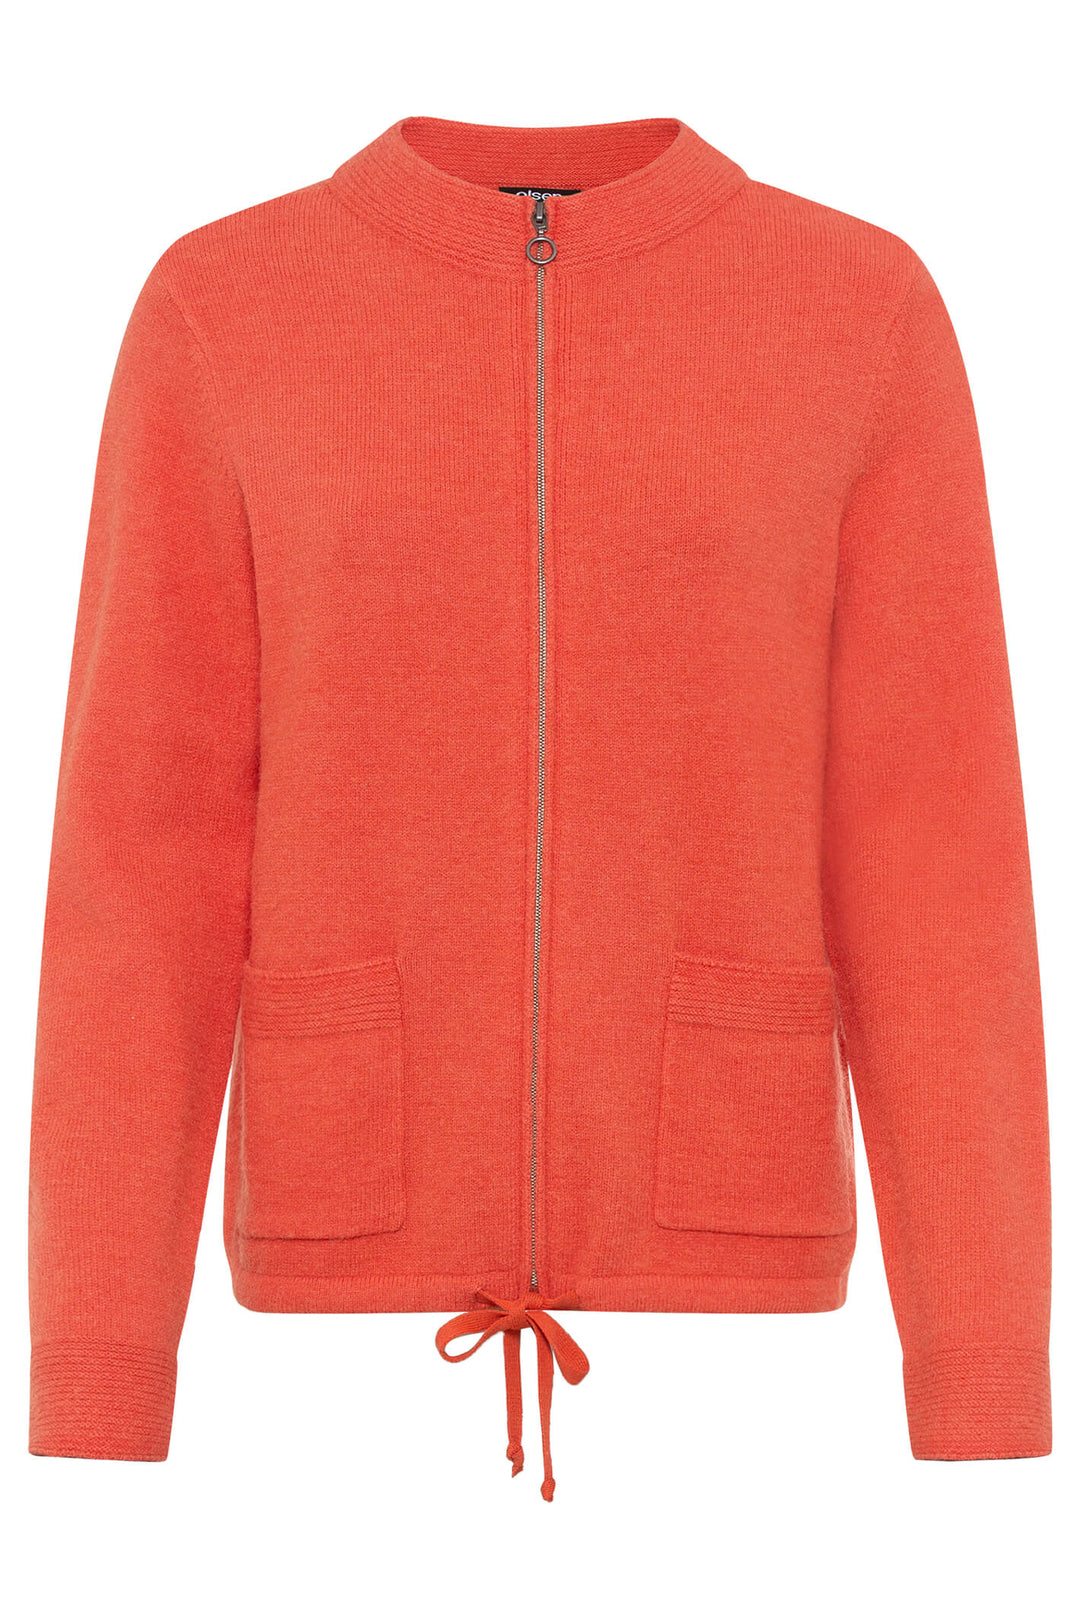 Olsen 11004106 Spiced Orange Zip Front Cardigan - Experience Boutique